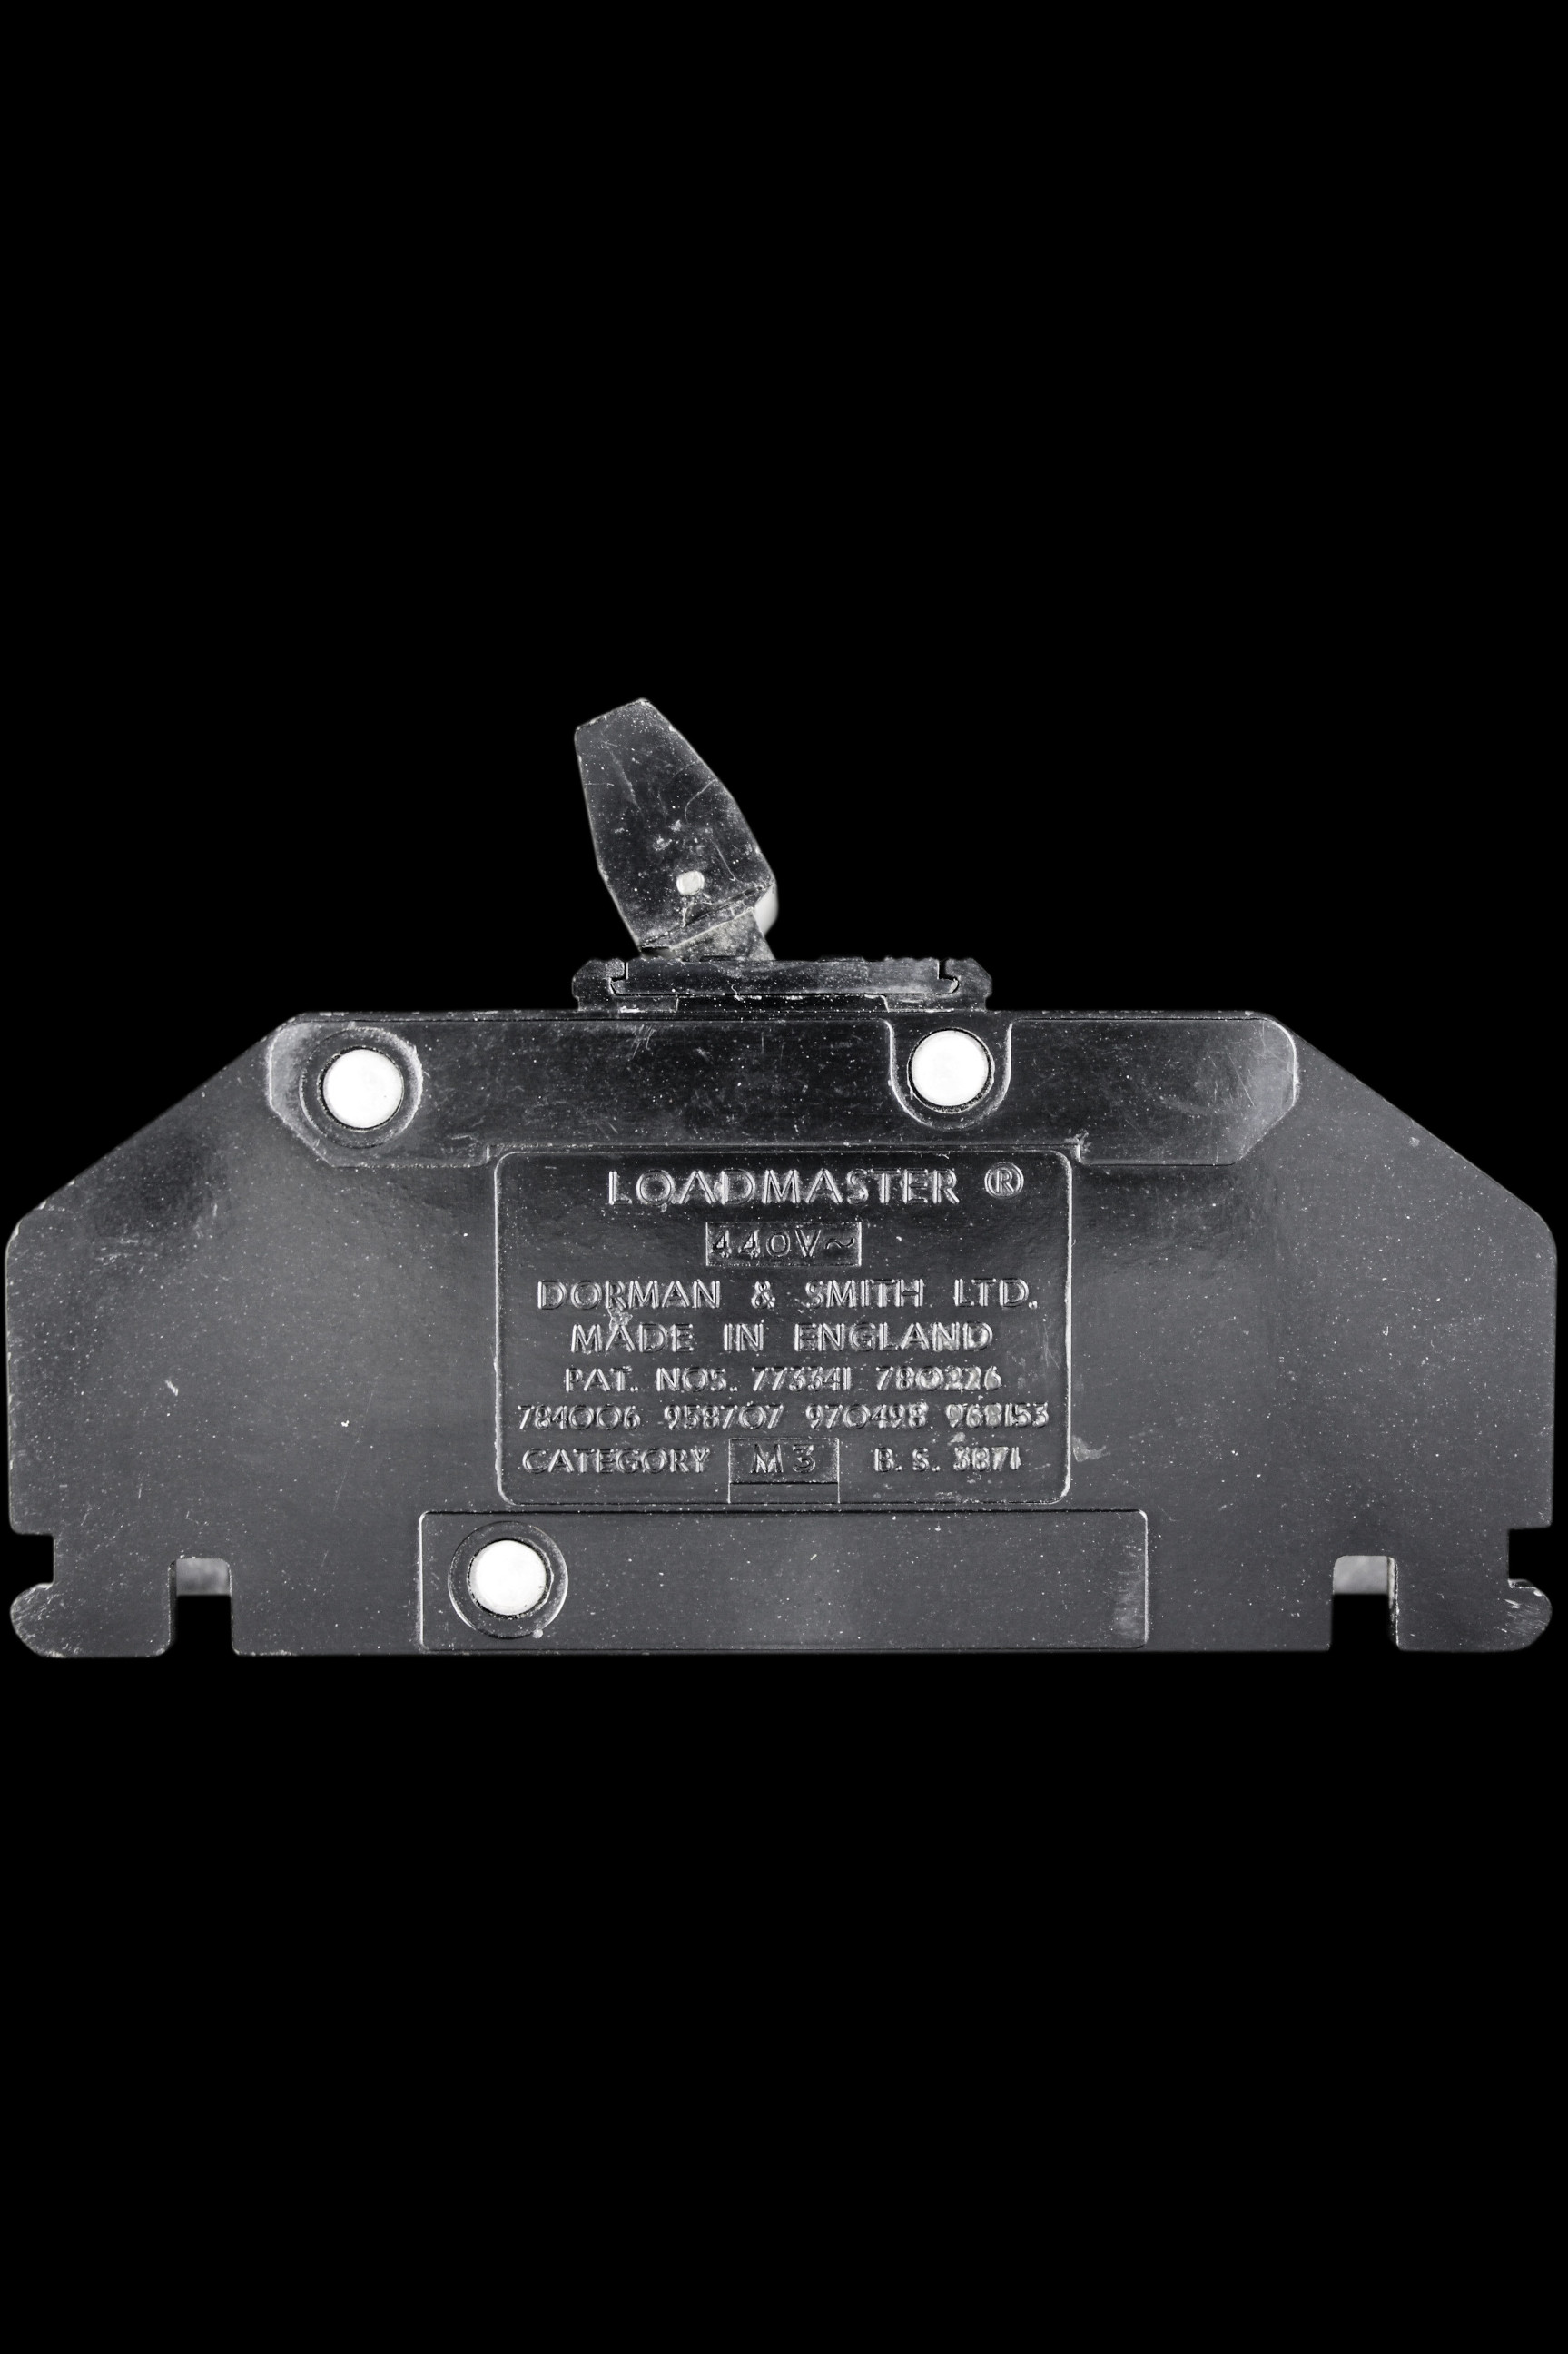 DORMAN 10 AMP M3 TRIPLE POLE MCB CIRCUIT BREAKER 440V LOADMASTER